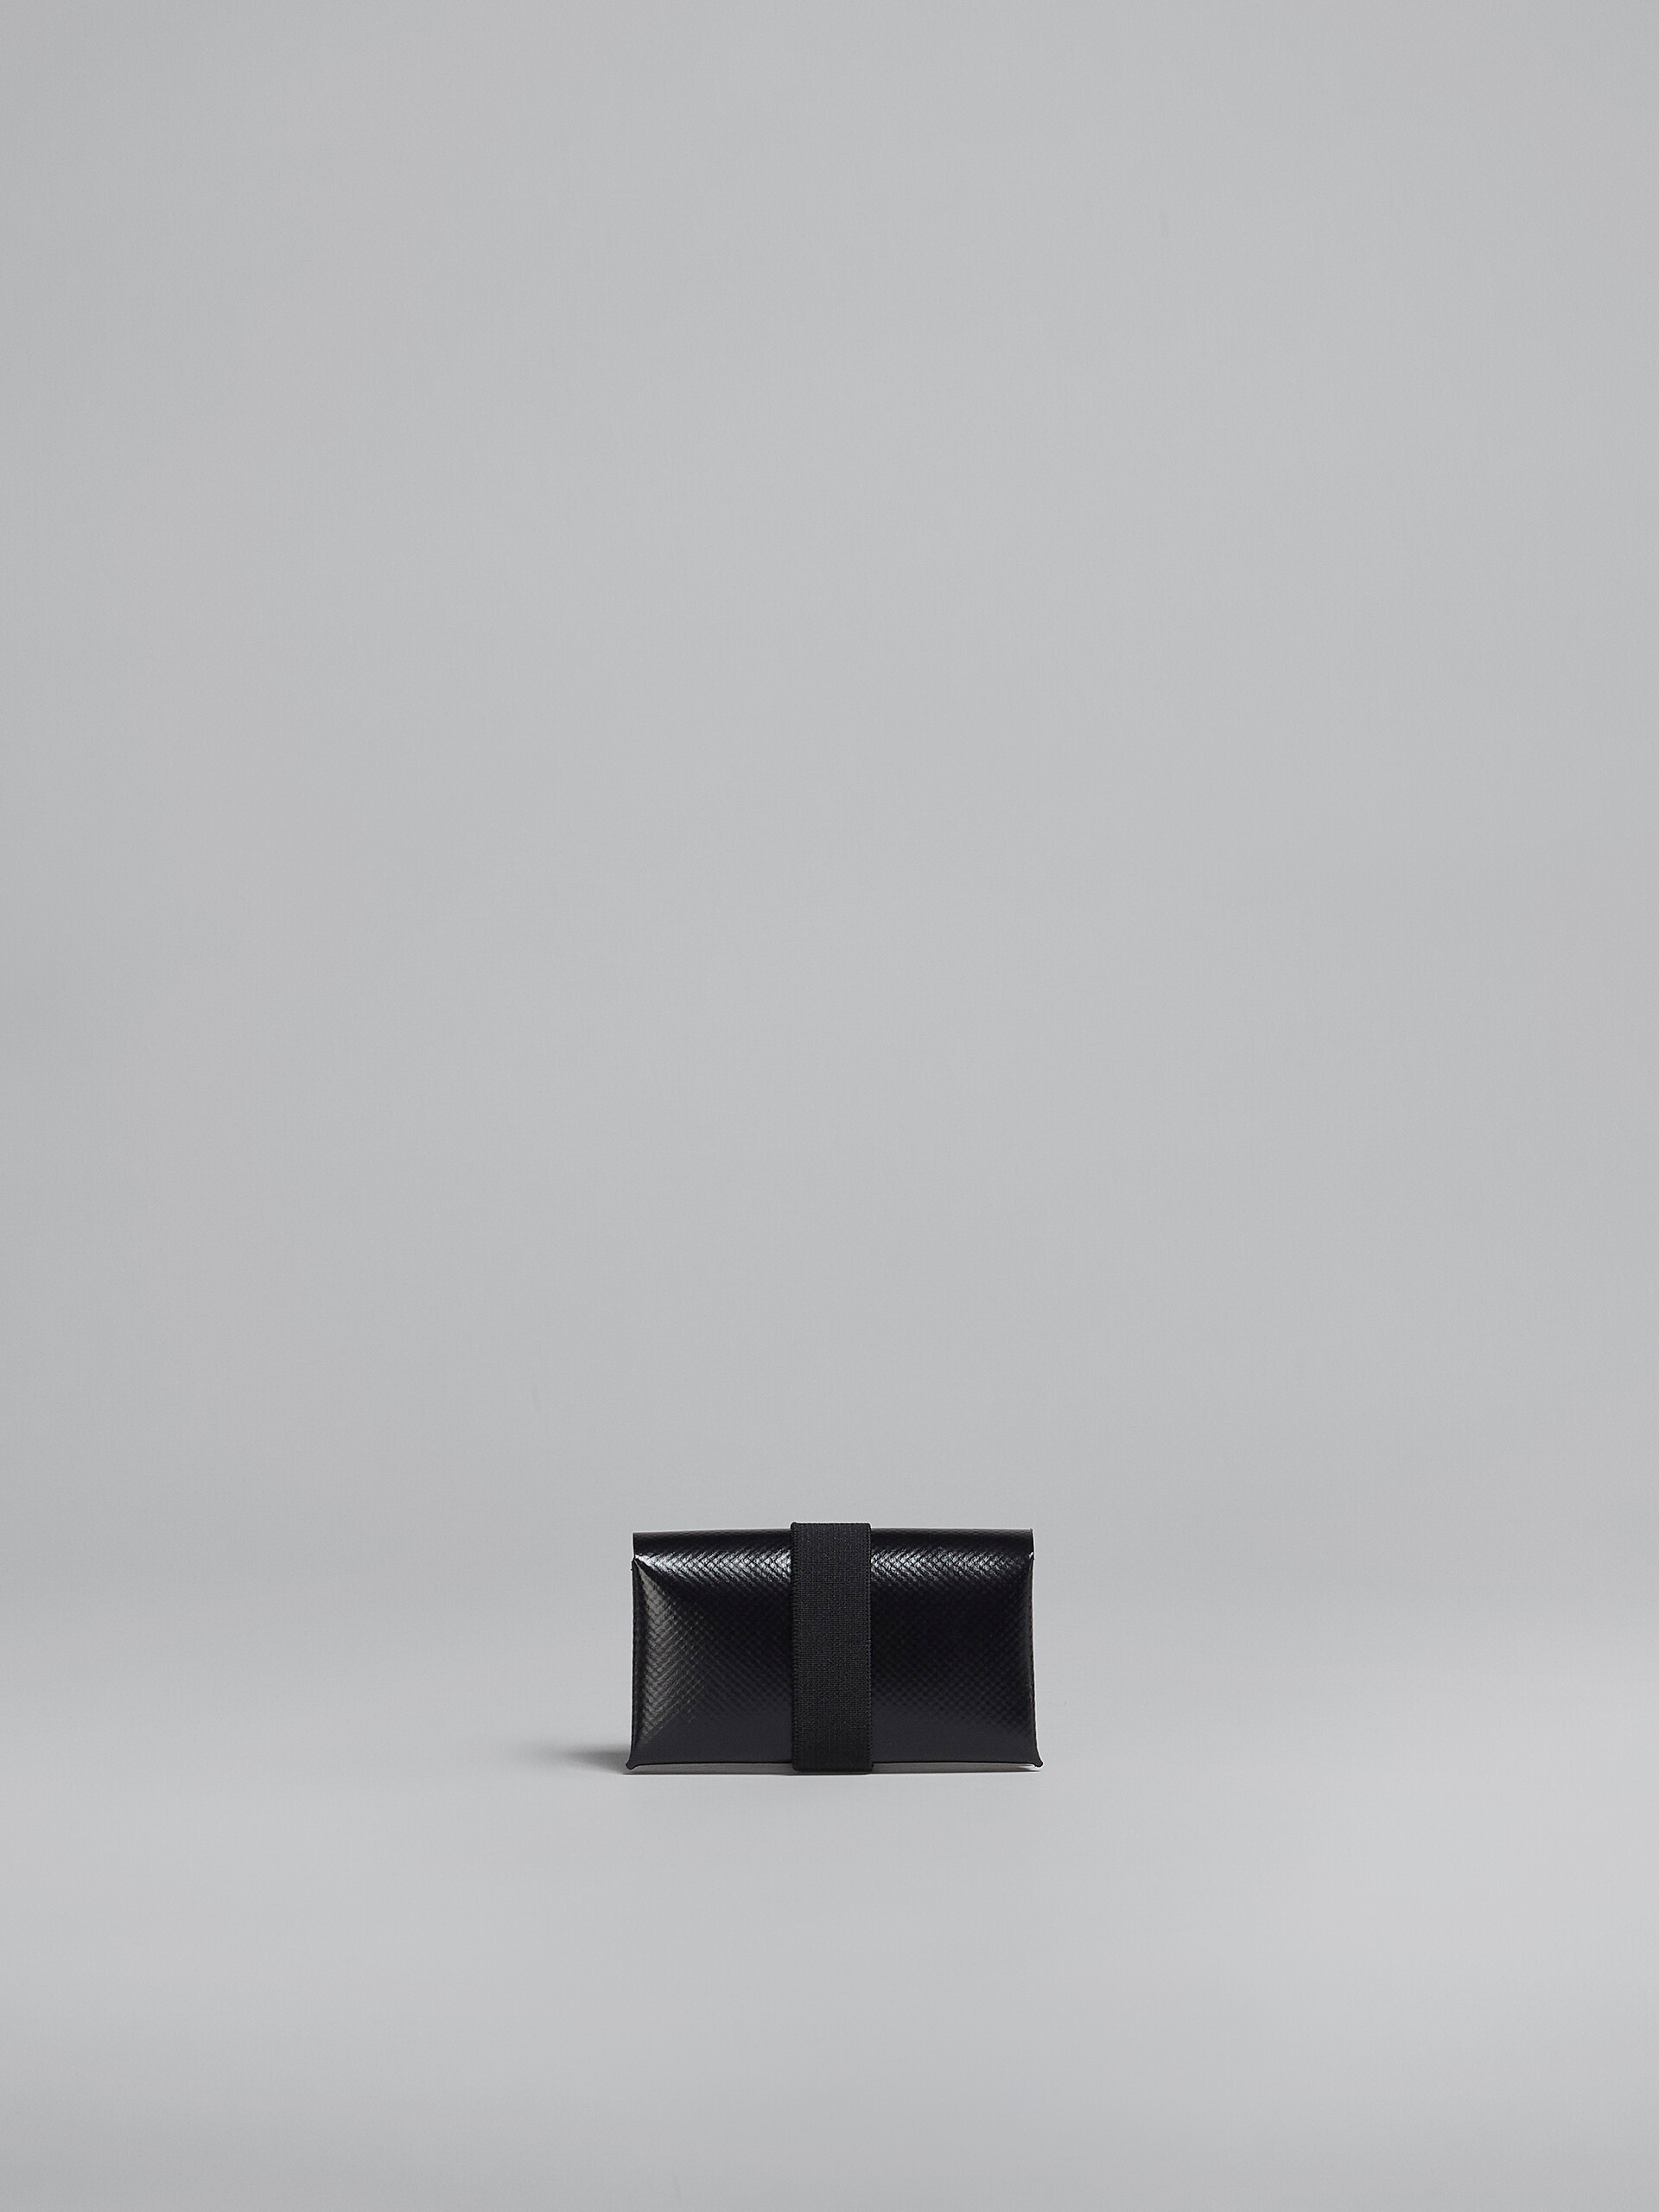 Portafoglio tri-fold nero - Portafogli - Image 3